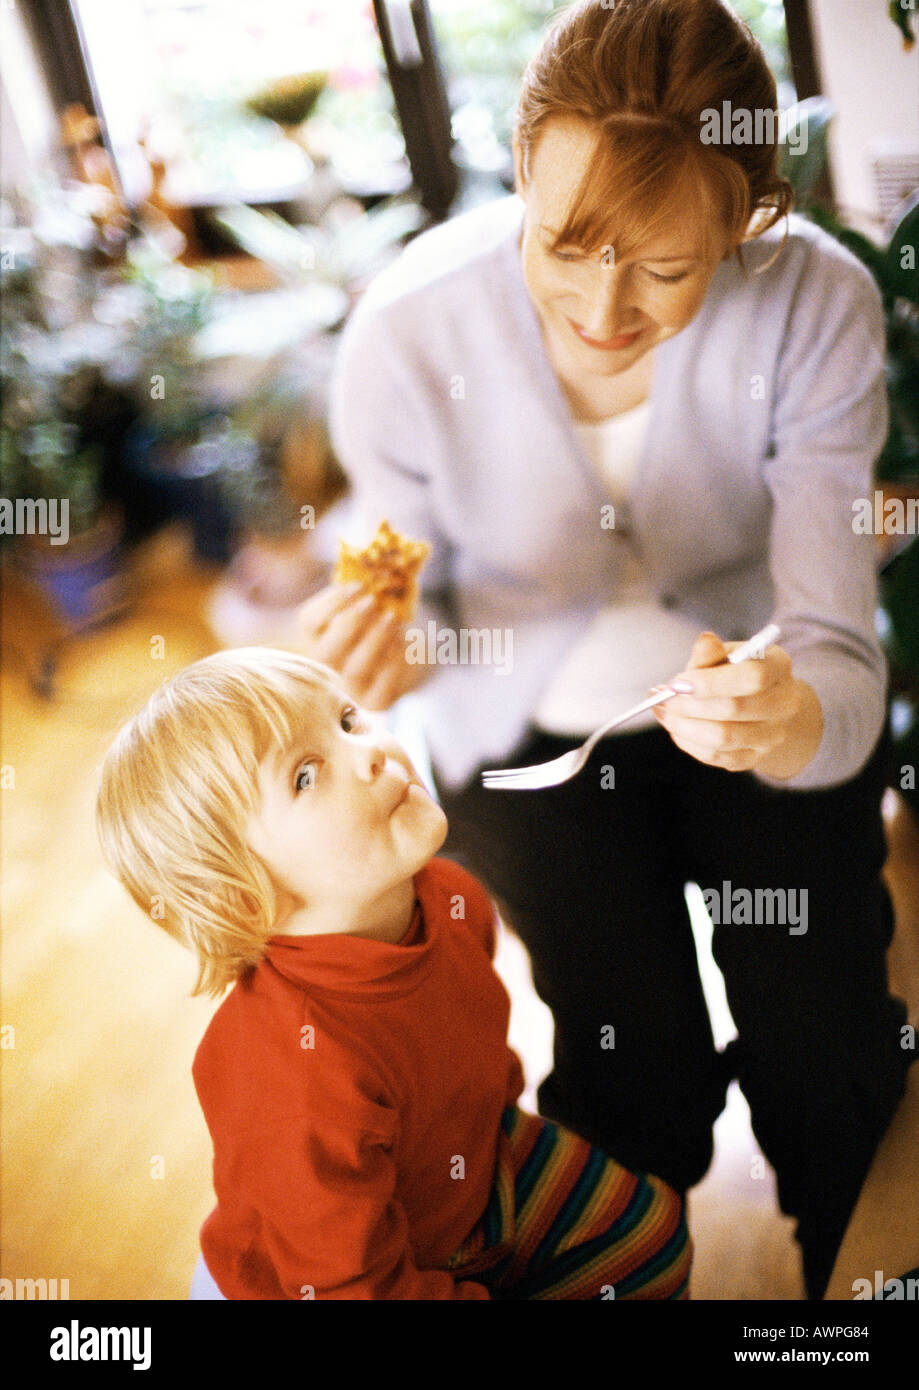 Woman feeding child Stock Photo